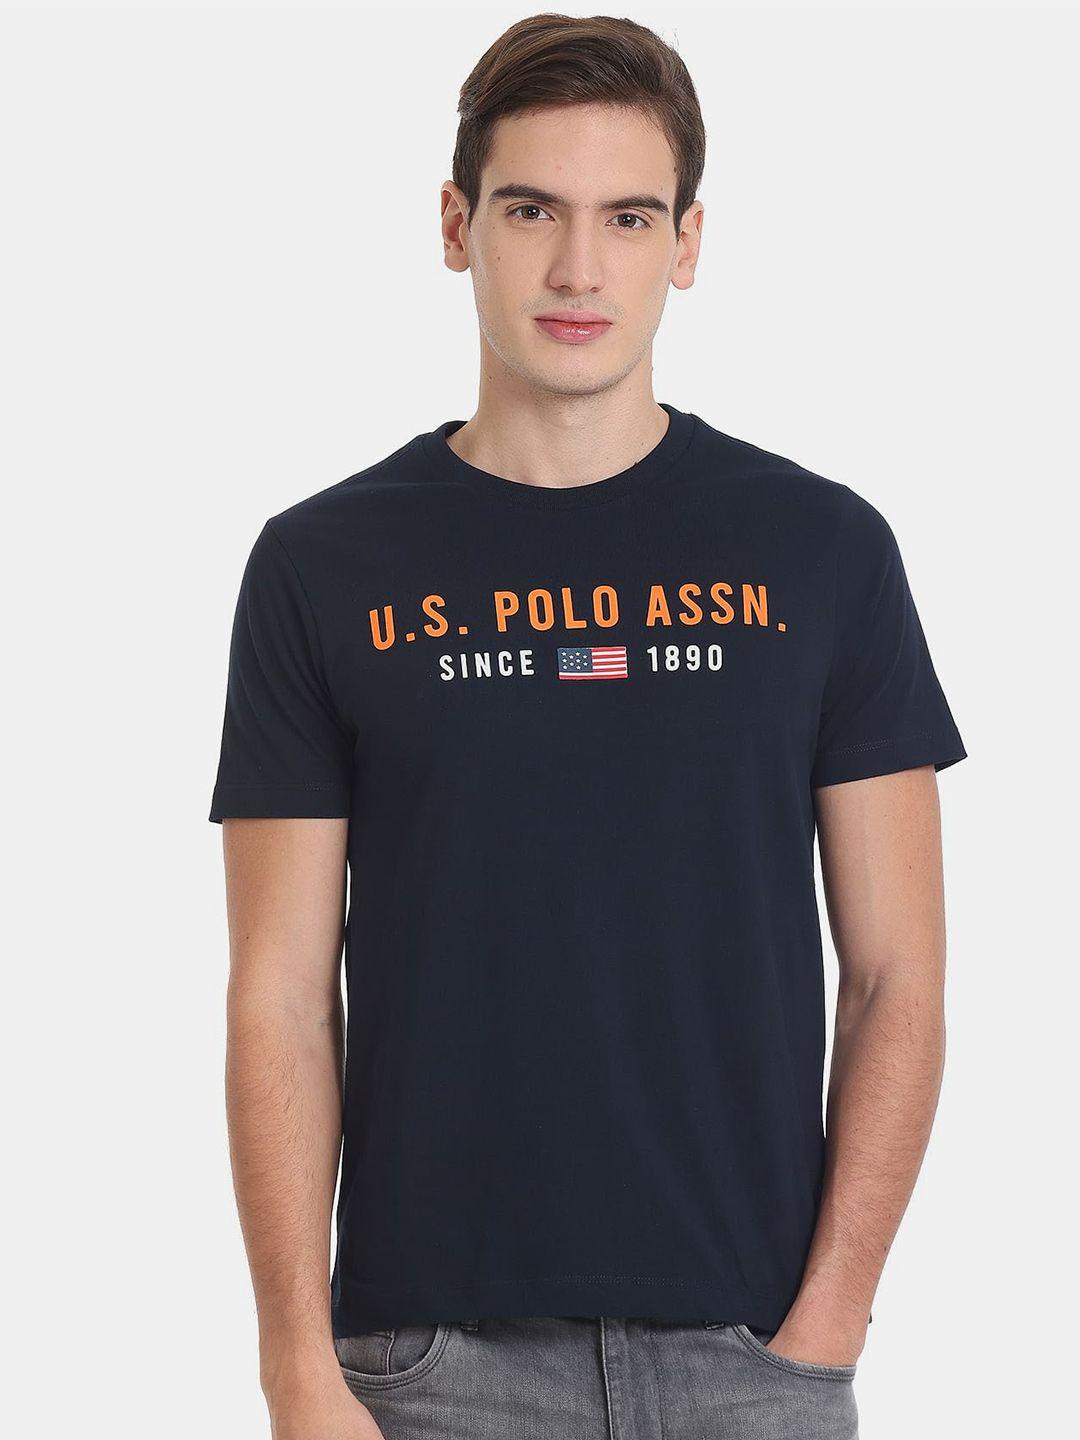 u.s.-polo-assn.-men-brand-logo-printed-slim-fit-pure-cotton-t-shirt